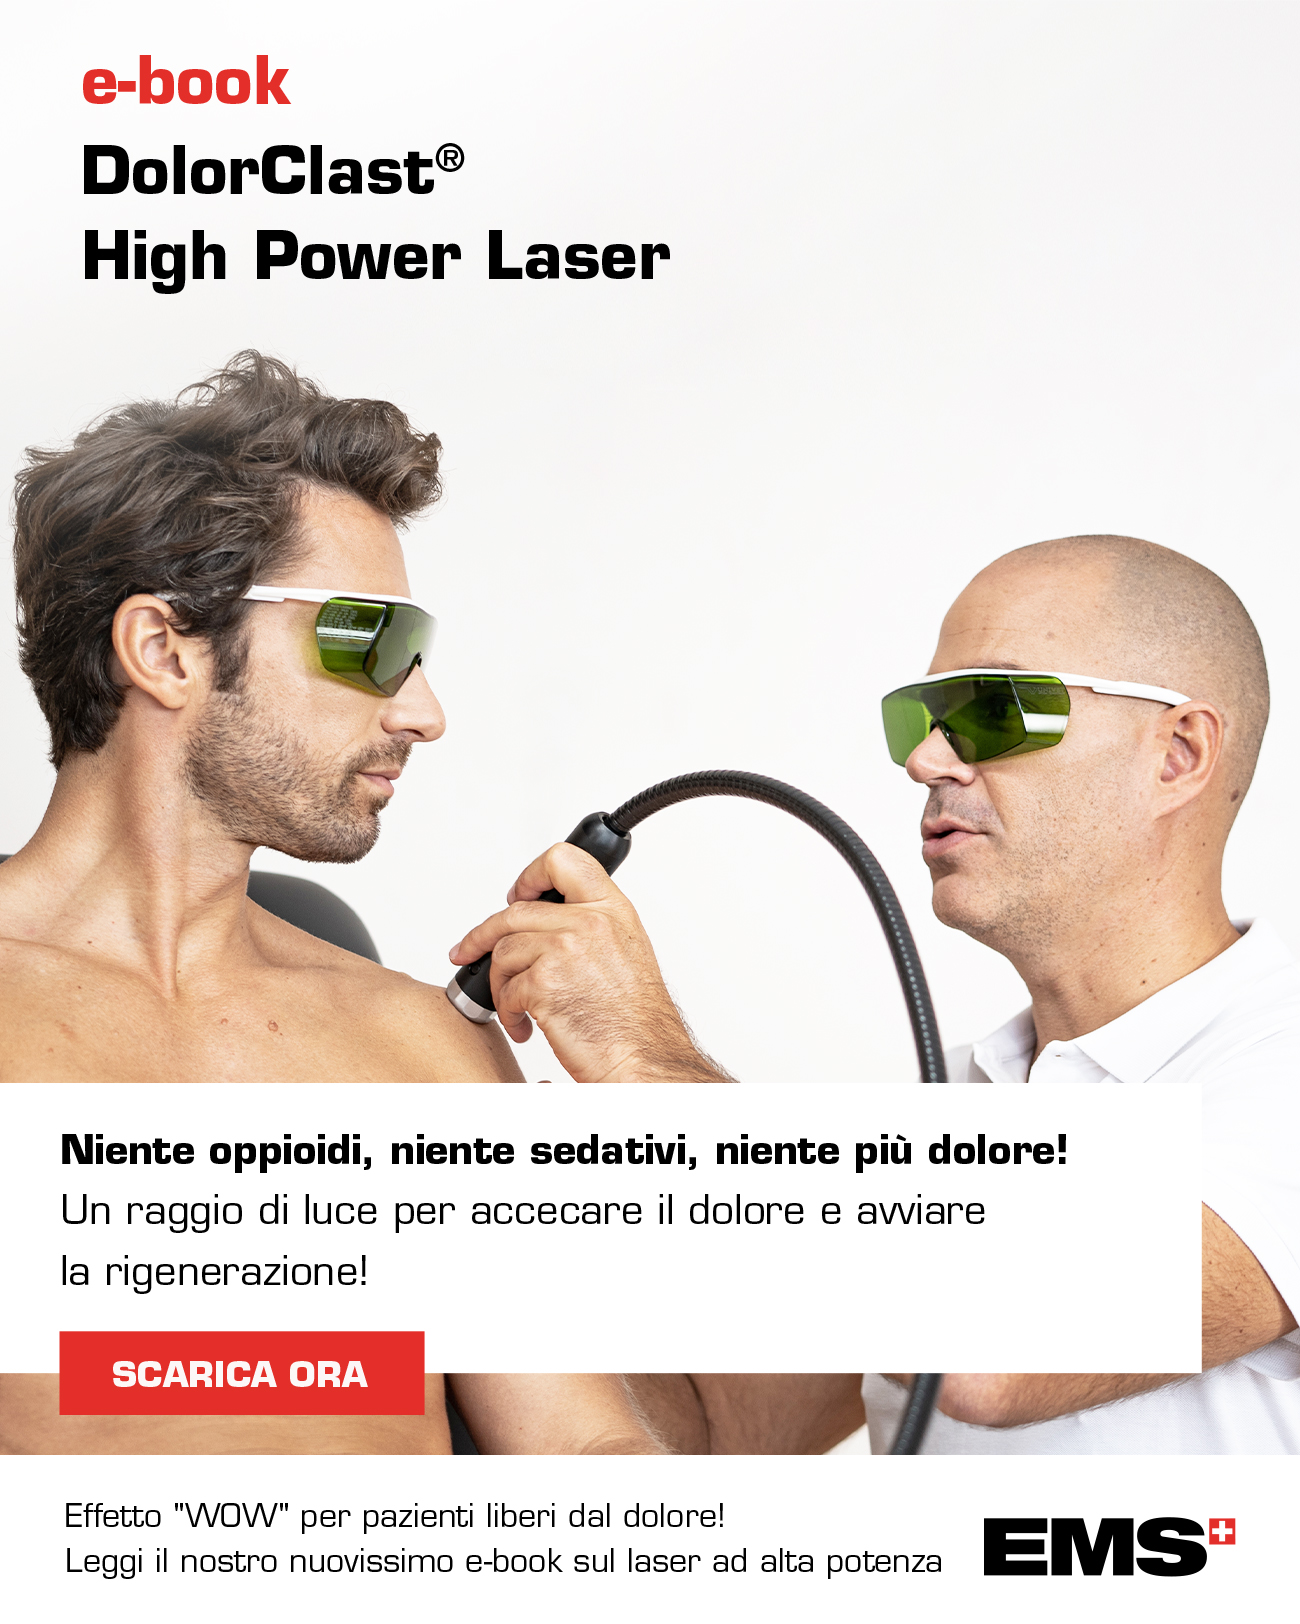 high power laser it